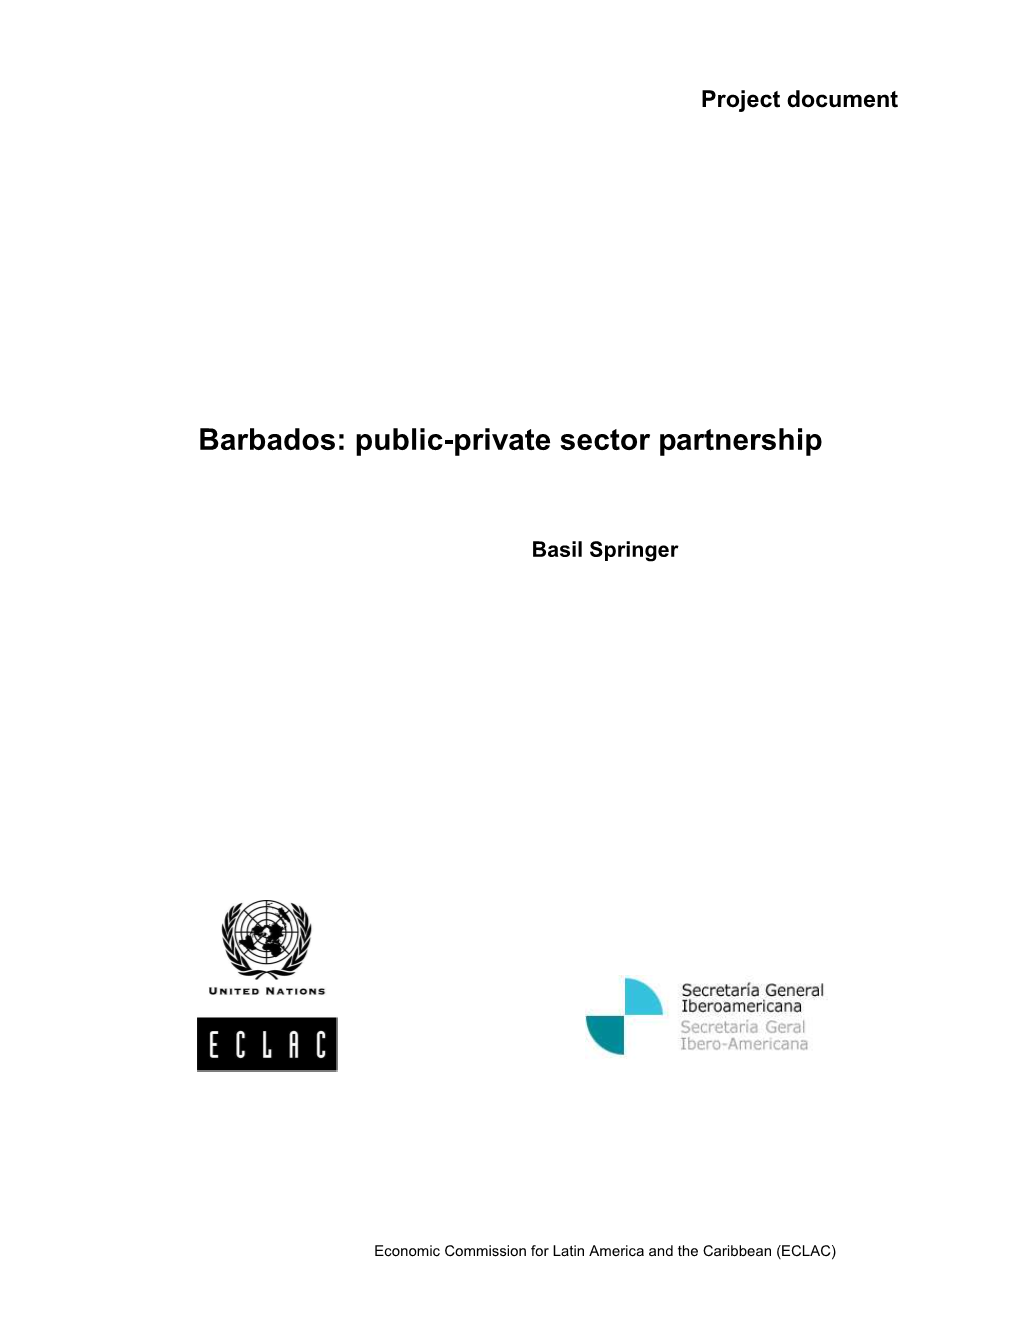 Barbados: Public-Private Sector Partnership